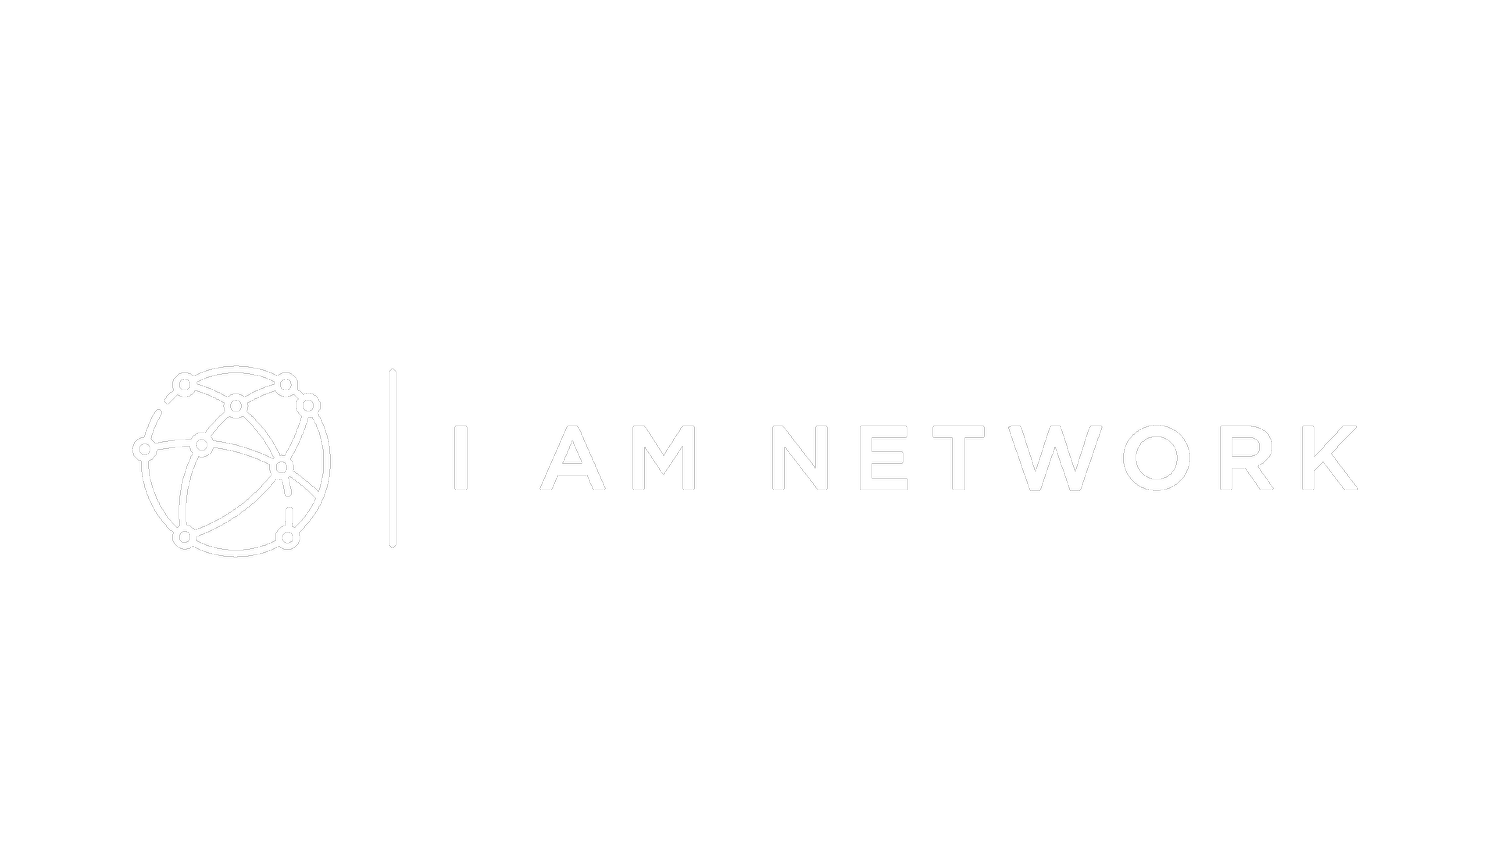 I AM Network